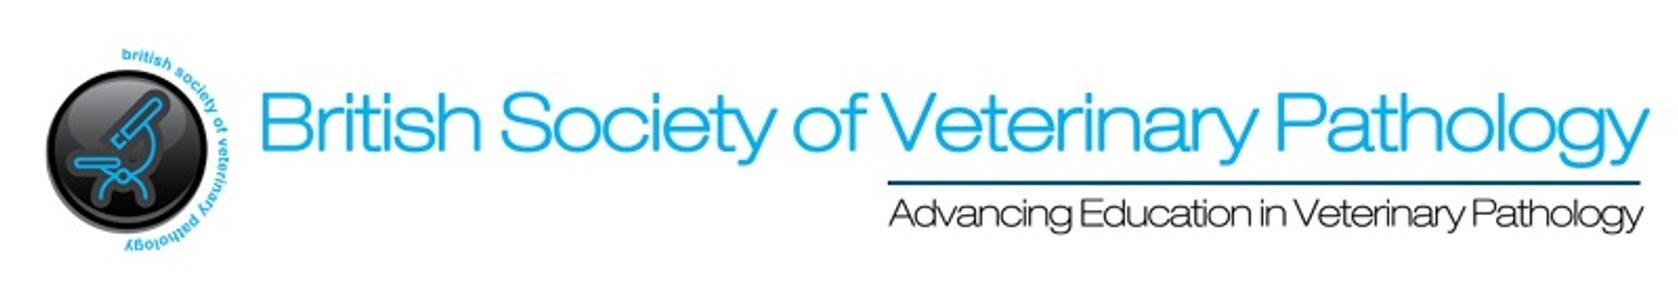 British Society for Veterinary Pathology.jpg